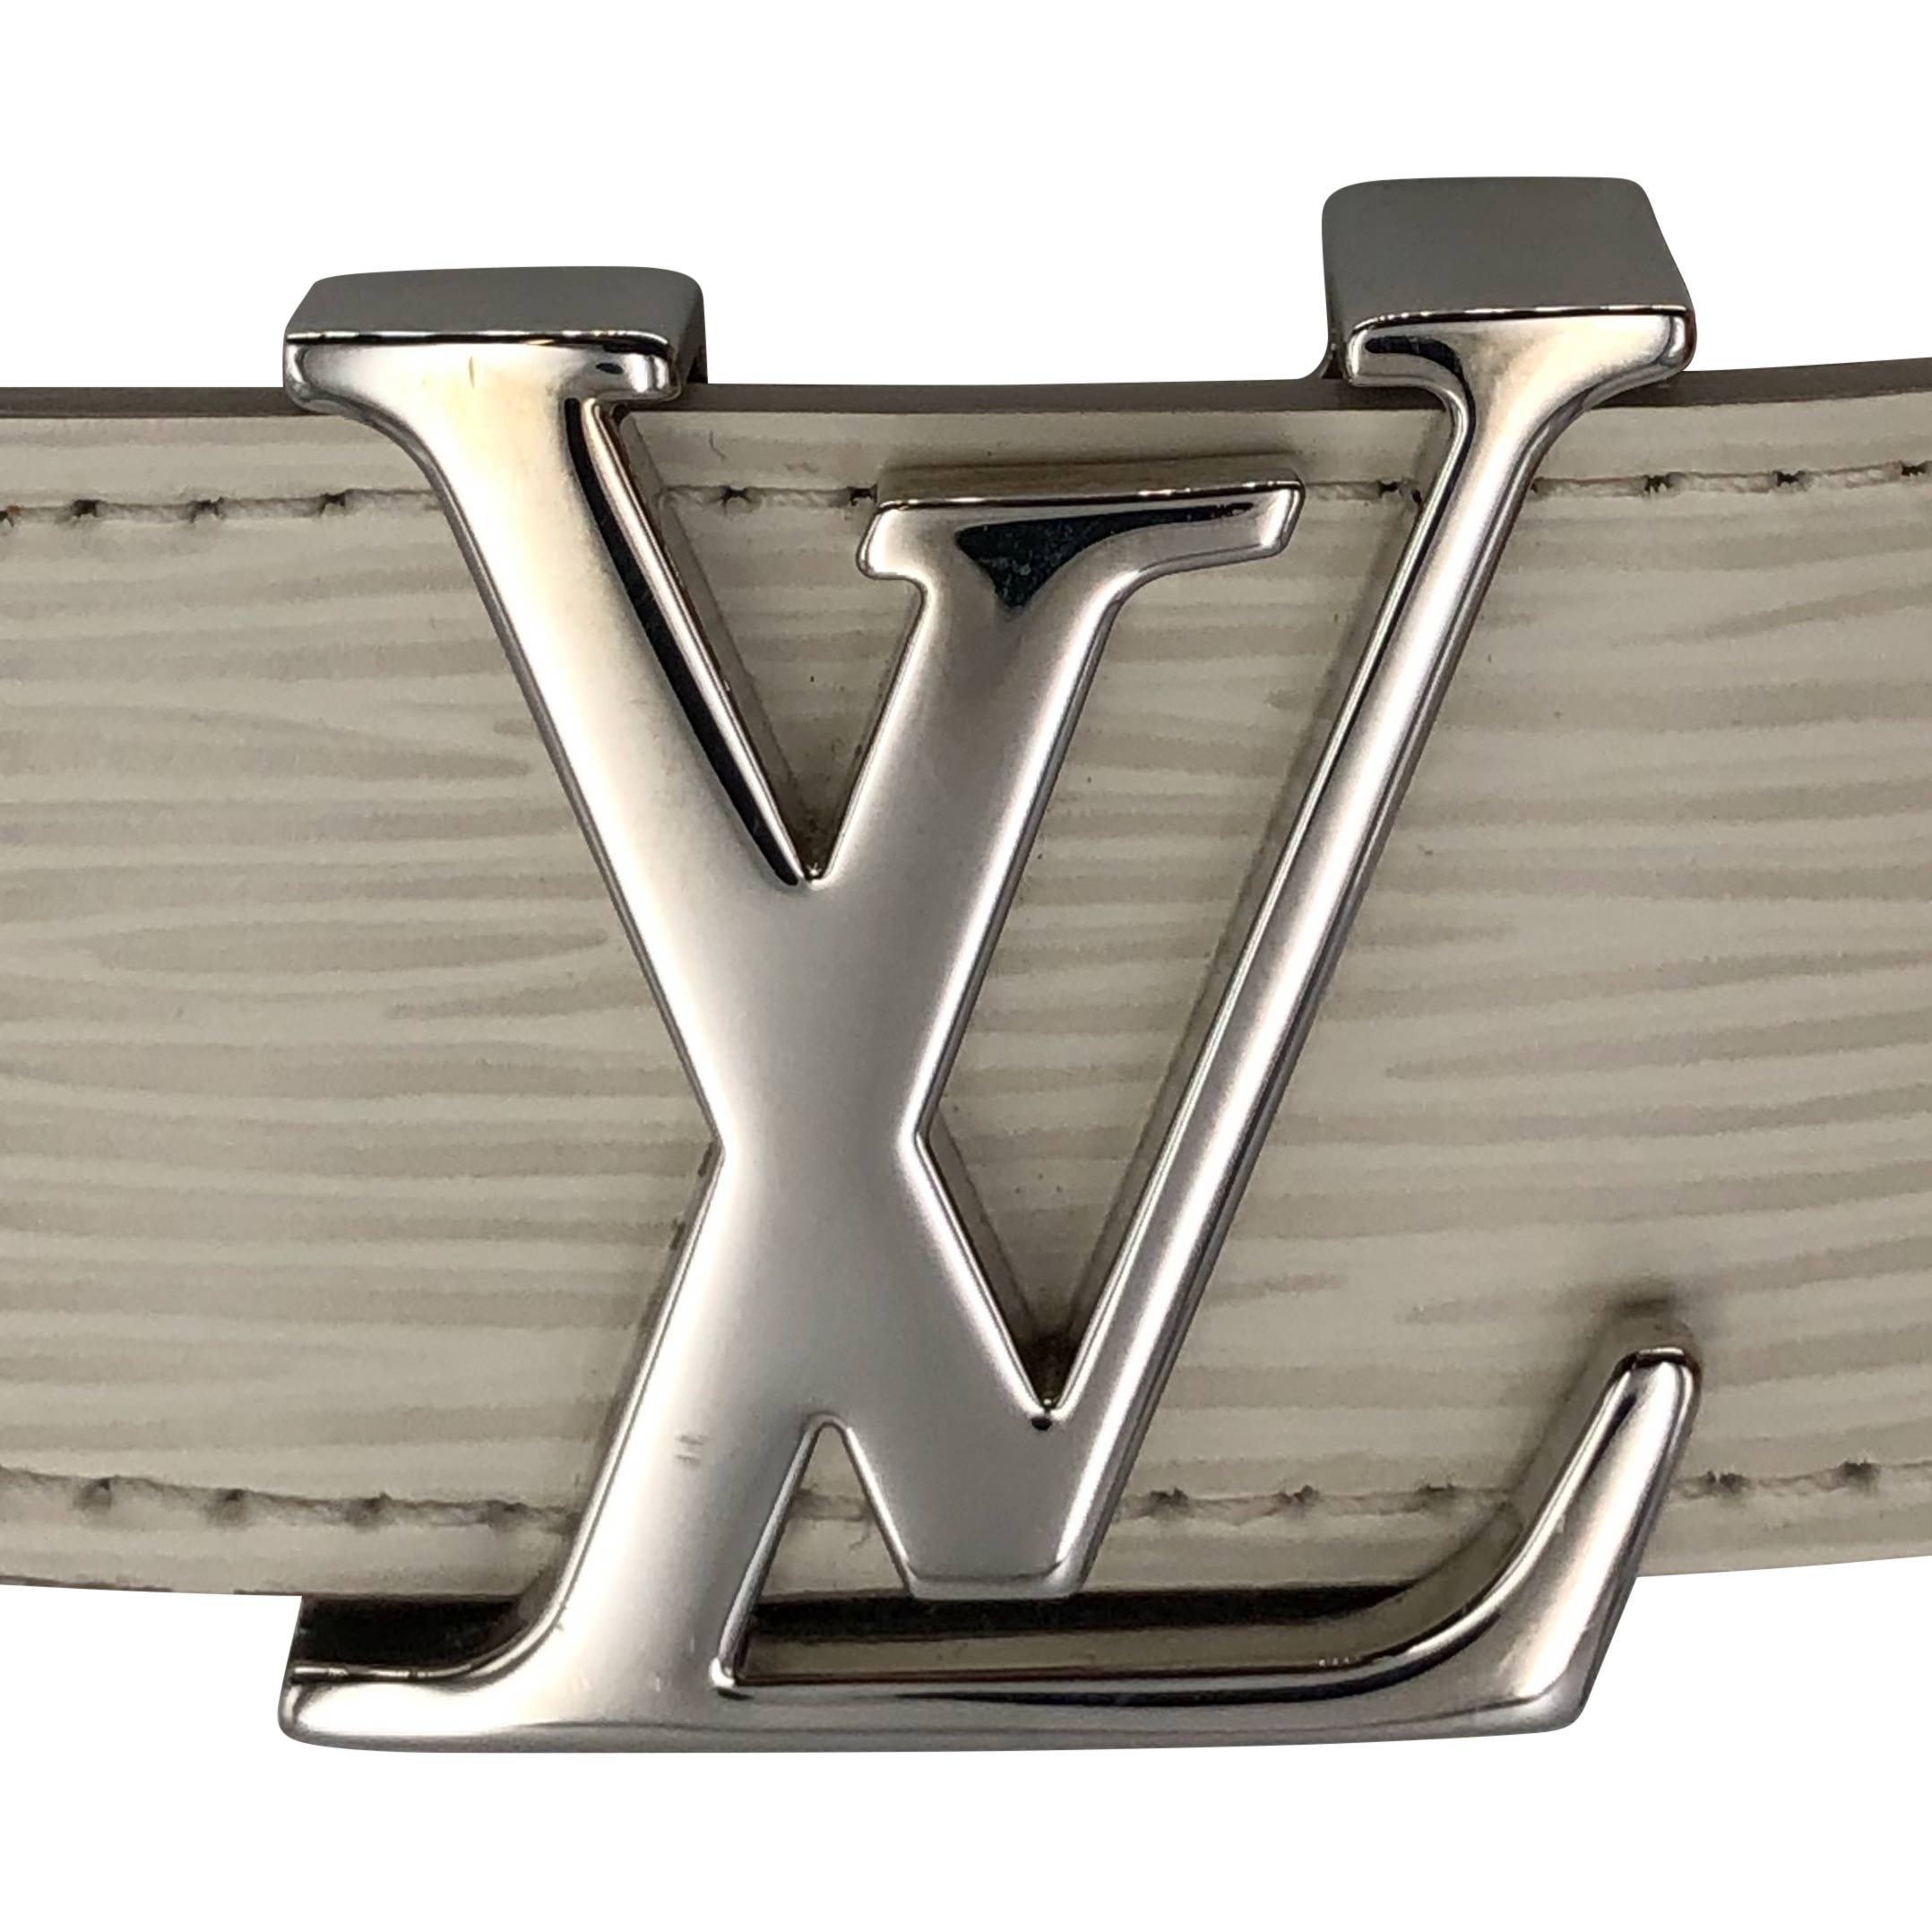 Used Louis Vuitton Belt Cream Damier Gold Buckle Belt - Size 42 US - Model  M9609